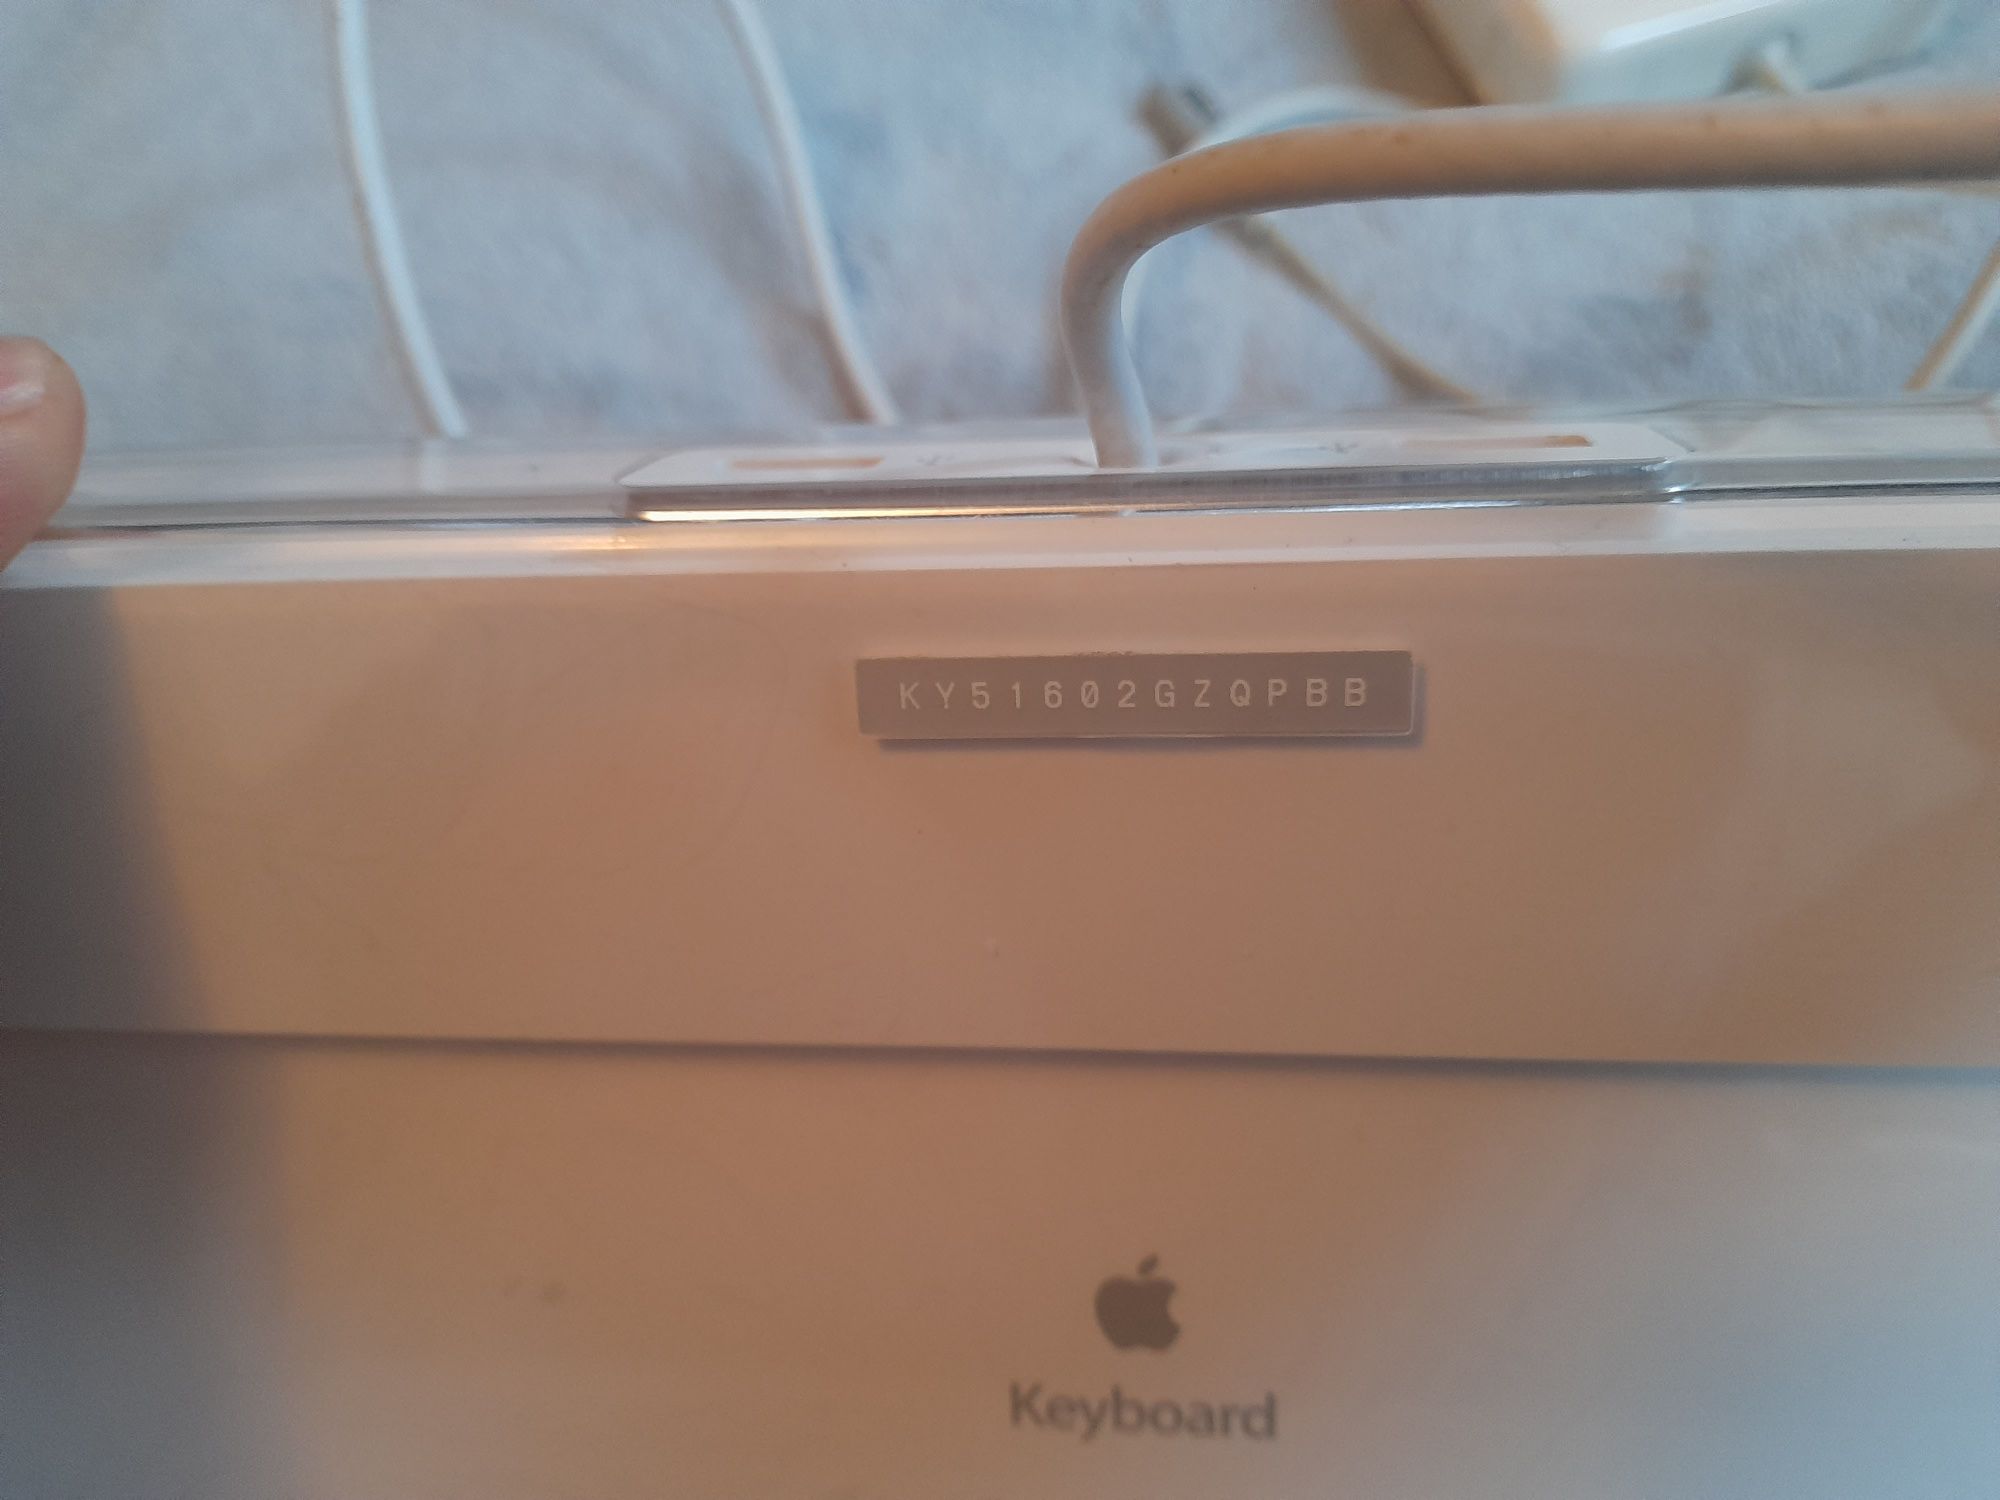 Incarcator și tastatură Apple.